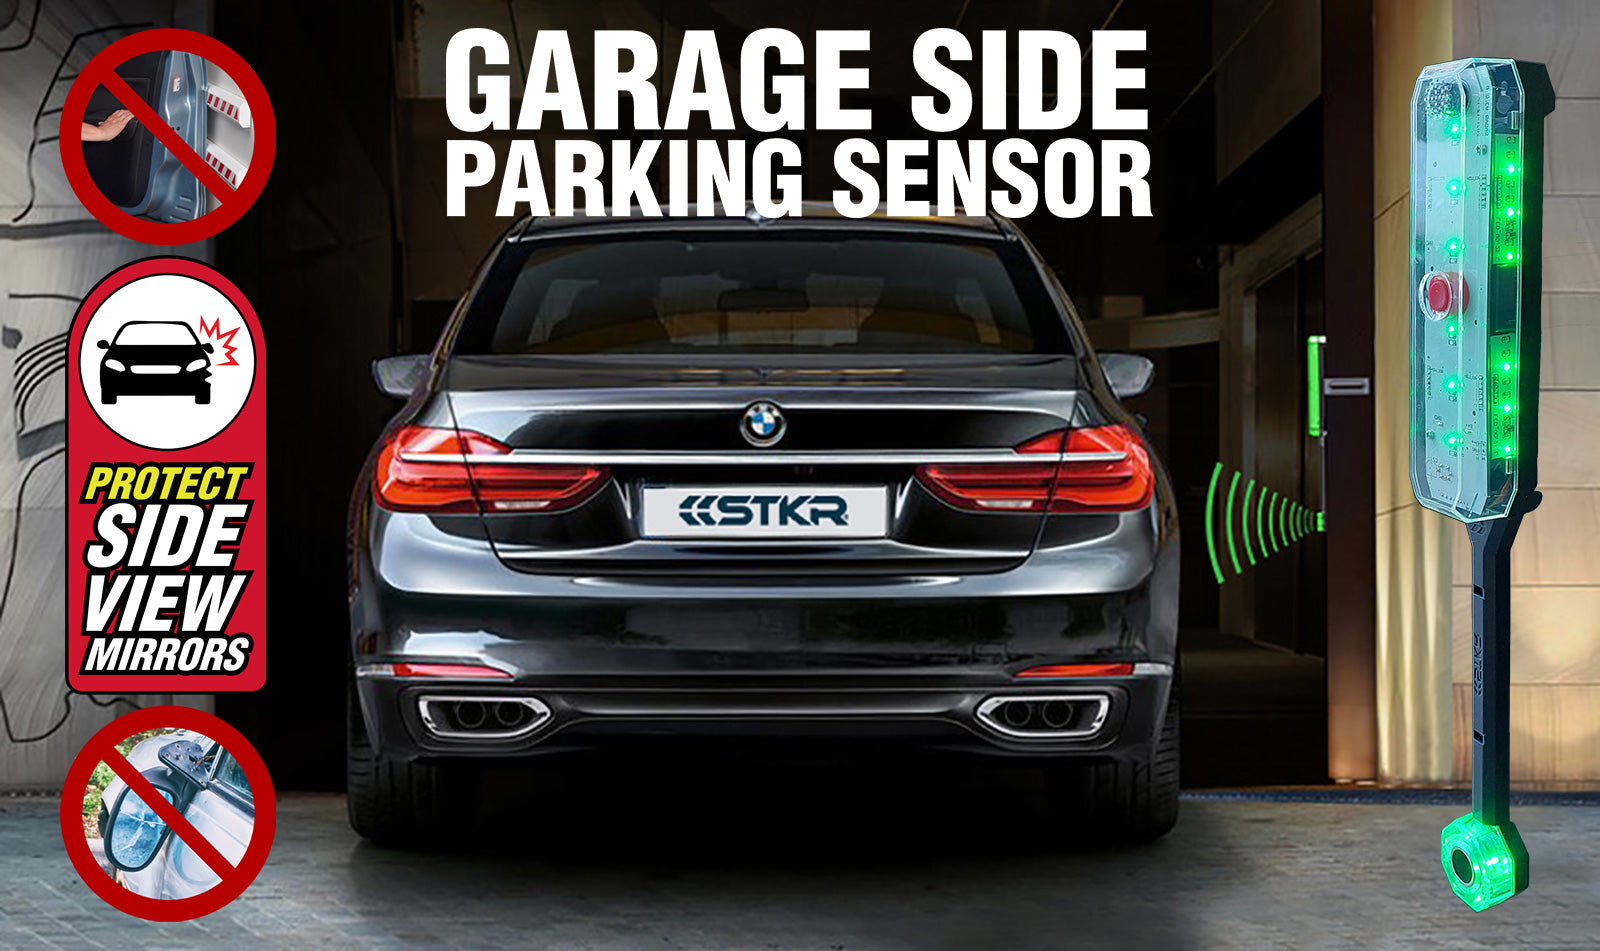 Garage Parking Side Sensor poster featuring a car pulling into a garage